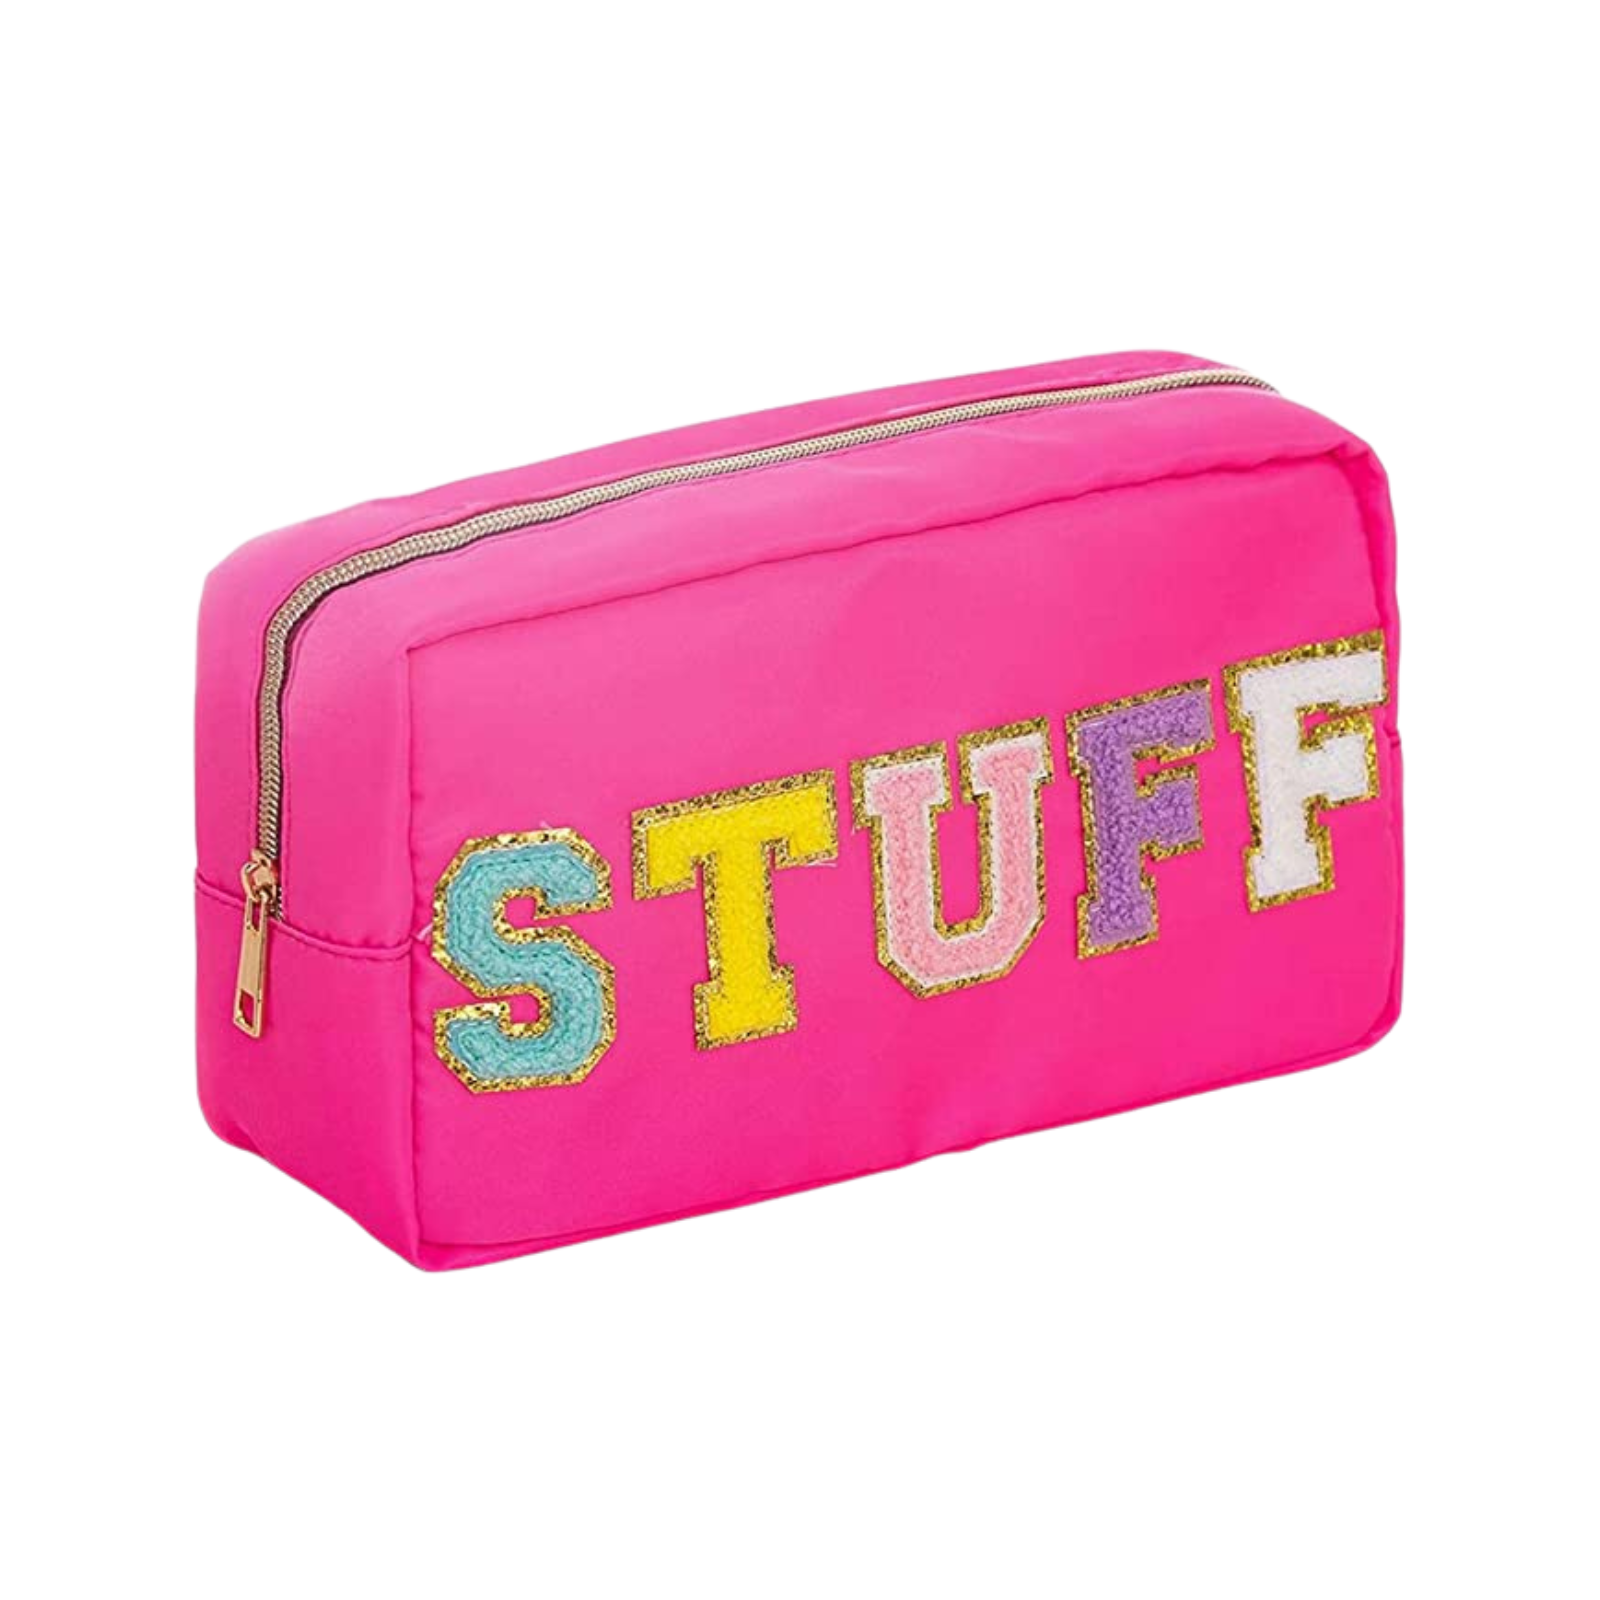 Pink STUFF Bag